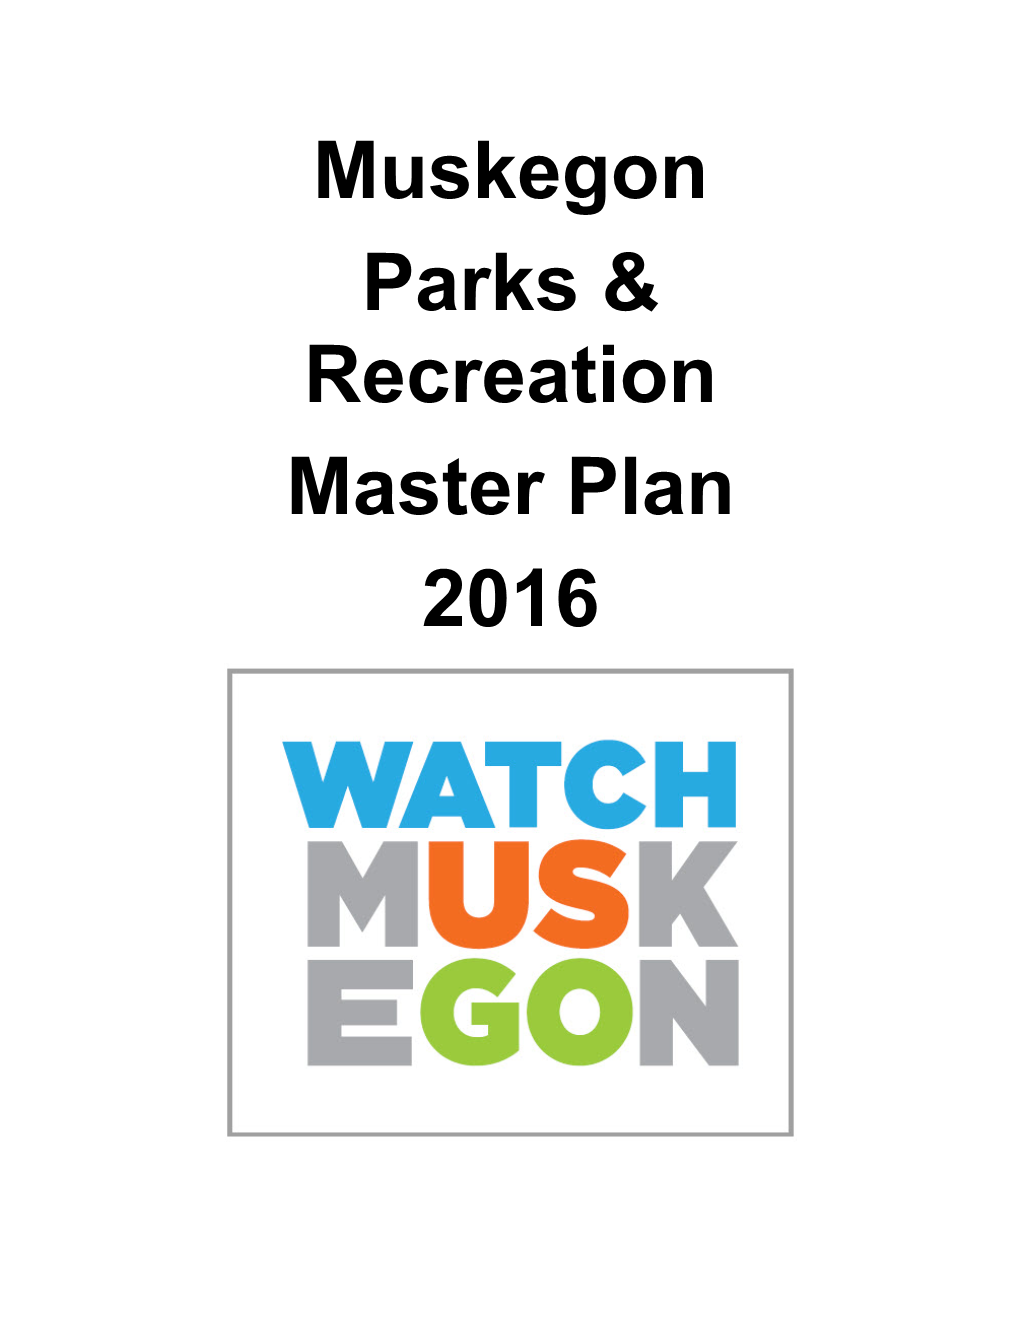 Muskegon Parks & Recreation Master Plan 2016